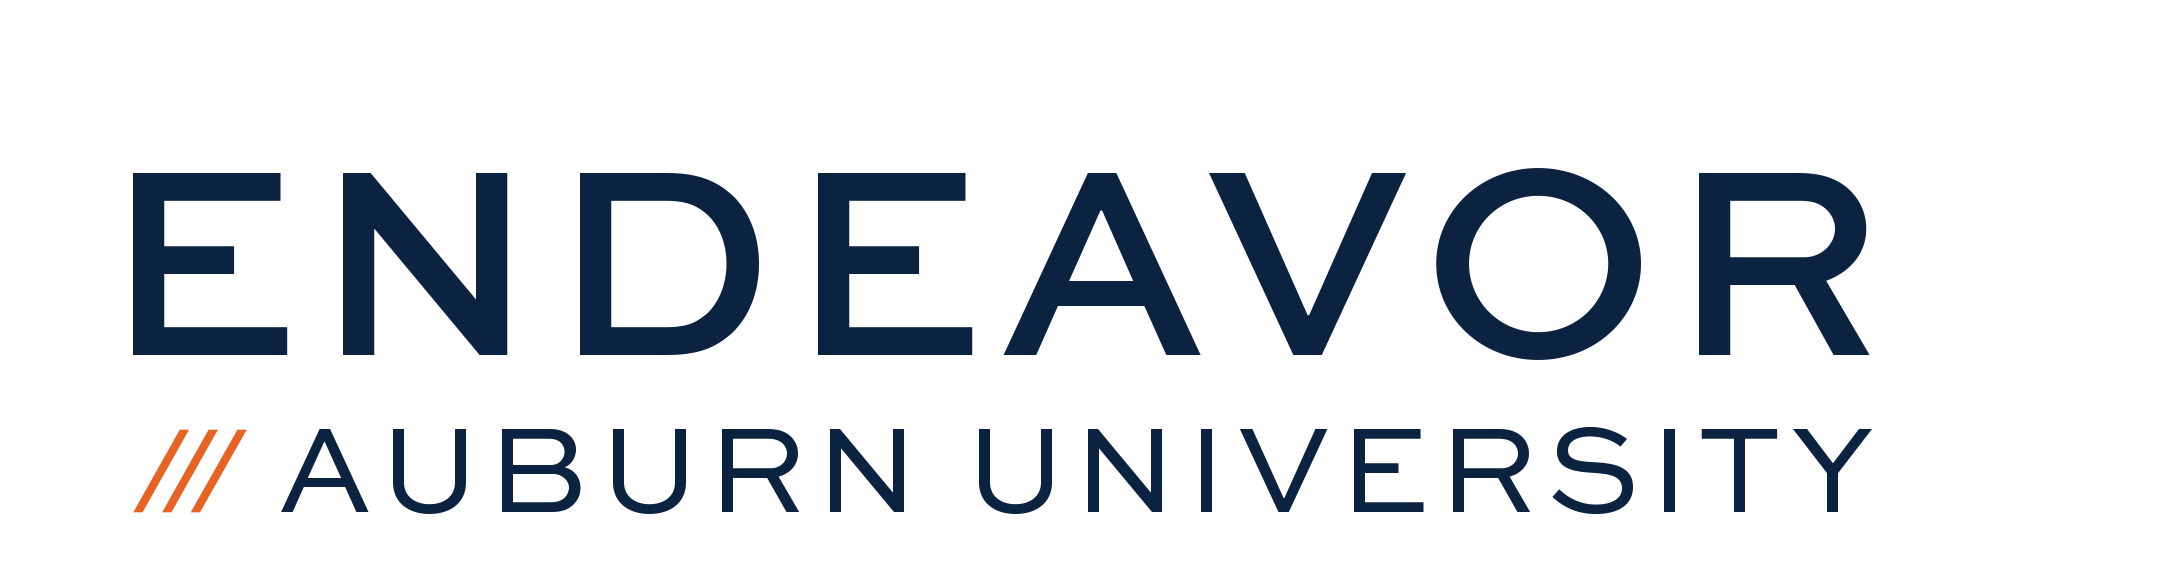 ENDEAVOR Auburn University blue and orange logo graphic